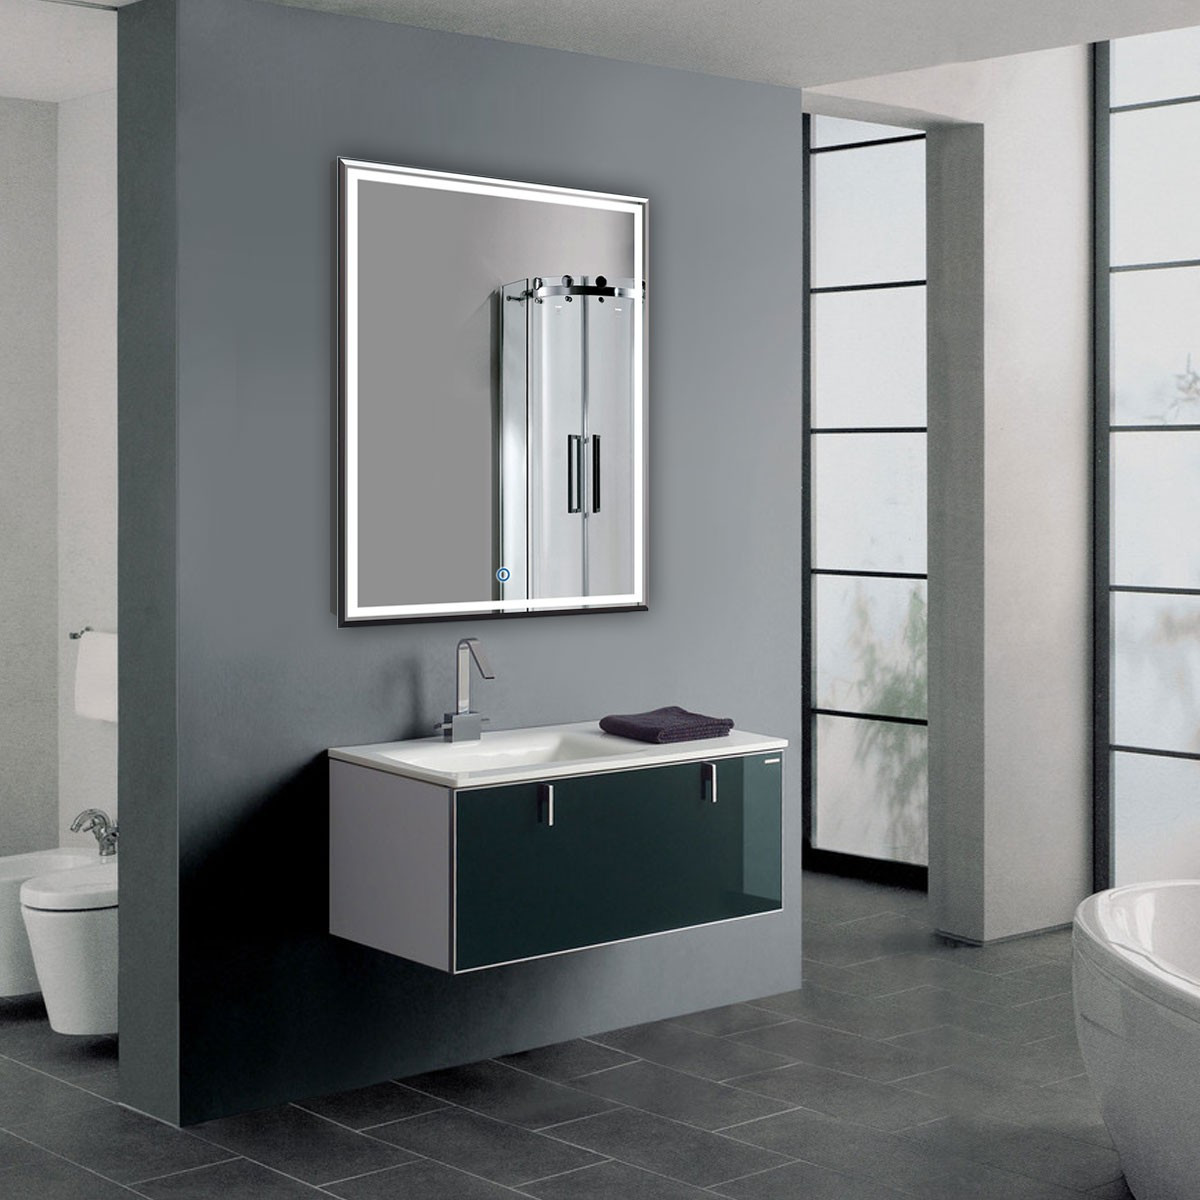 36 Bathroom Mirror
 28 x 36 In Vertical LED Bathroom Silvered Mirror with